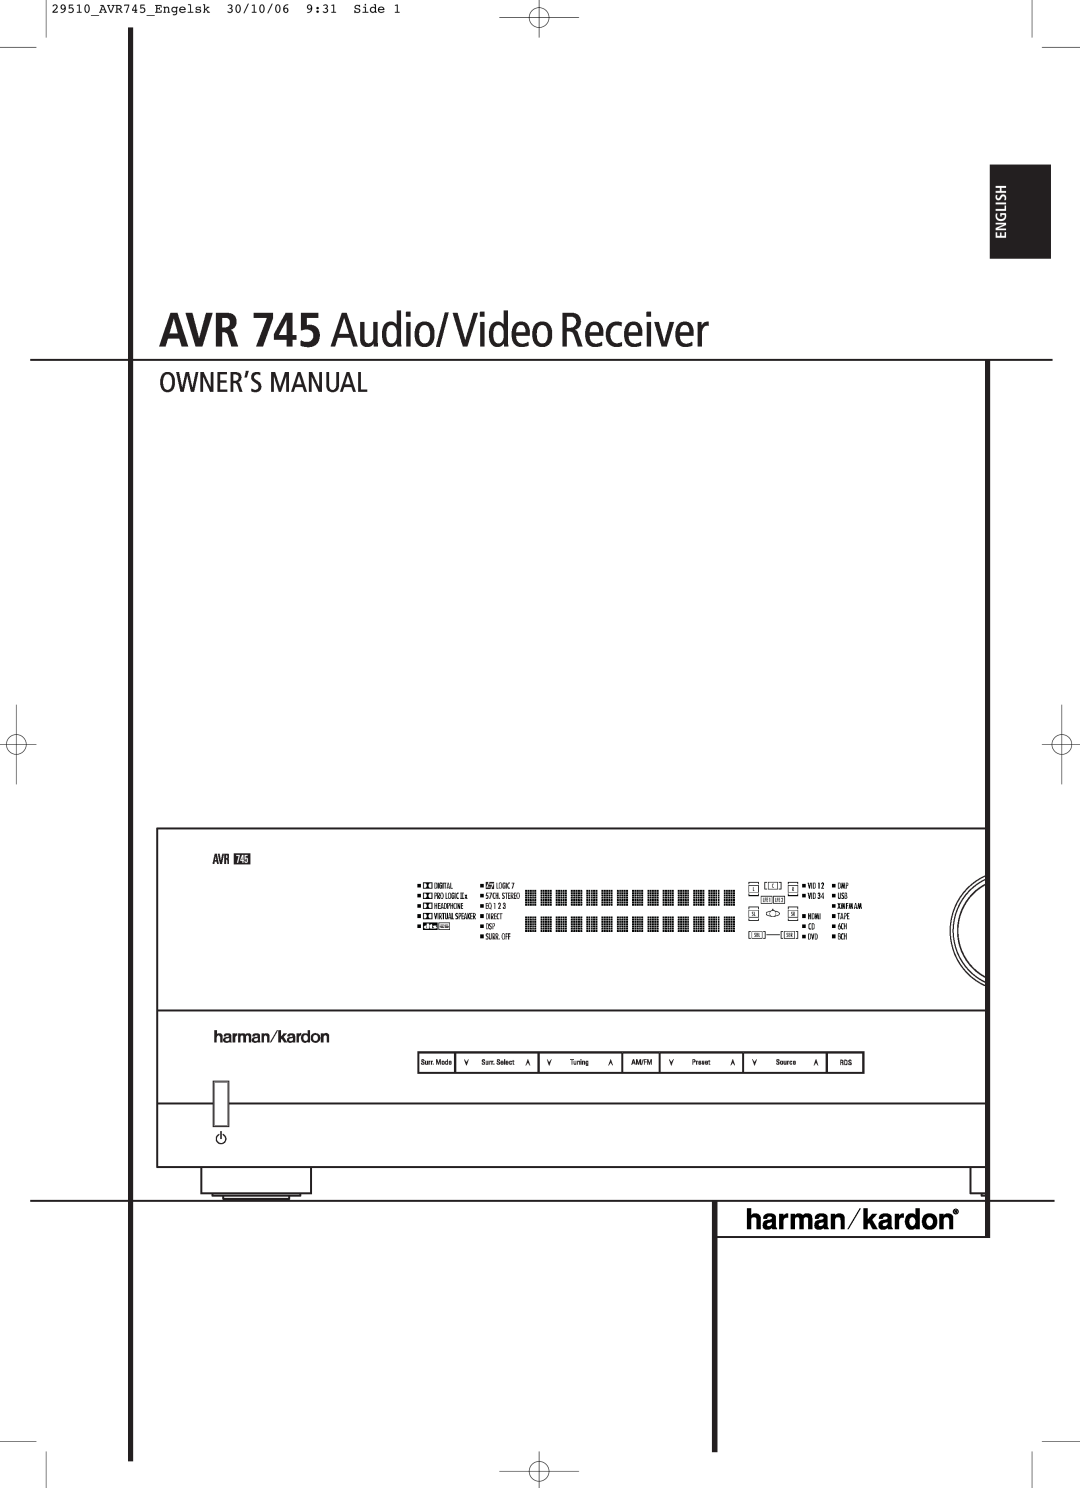 Harman-Kardon owner manual English, 29510 AVR745 Engelsk 30/10/06 9 31 Side, AVR 745 Audio/ Video Receiver 